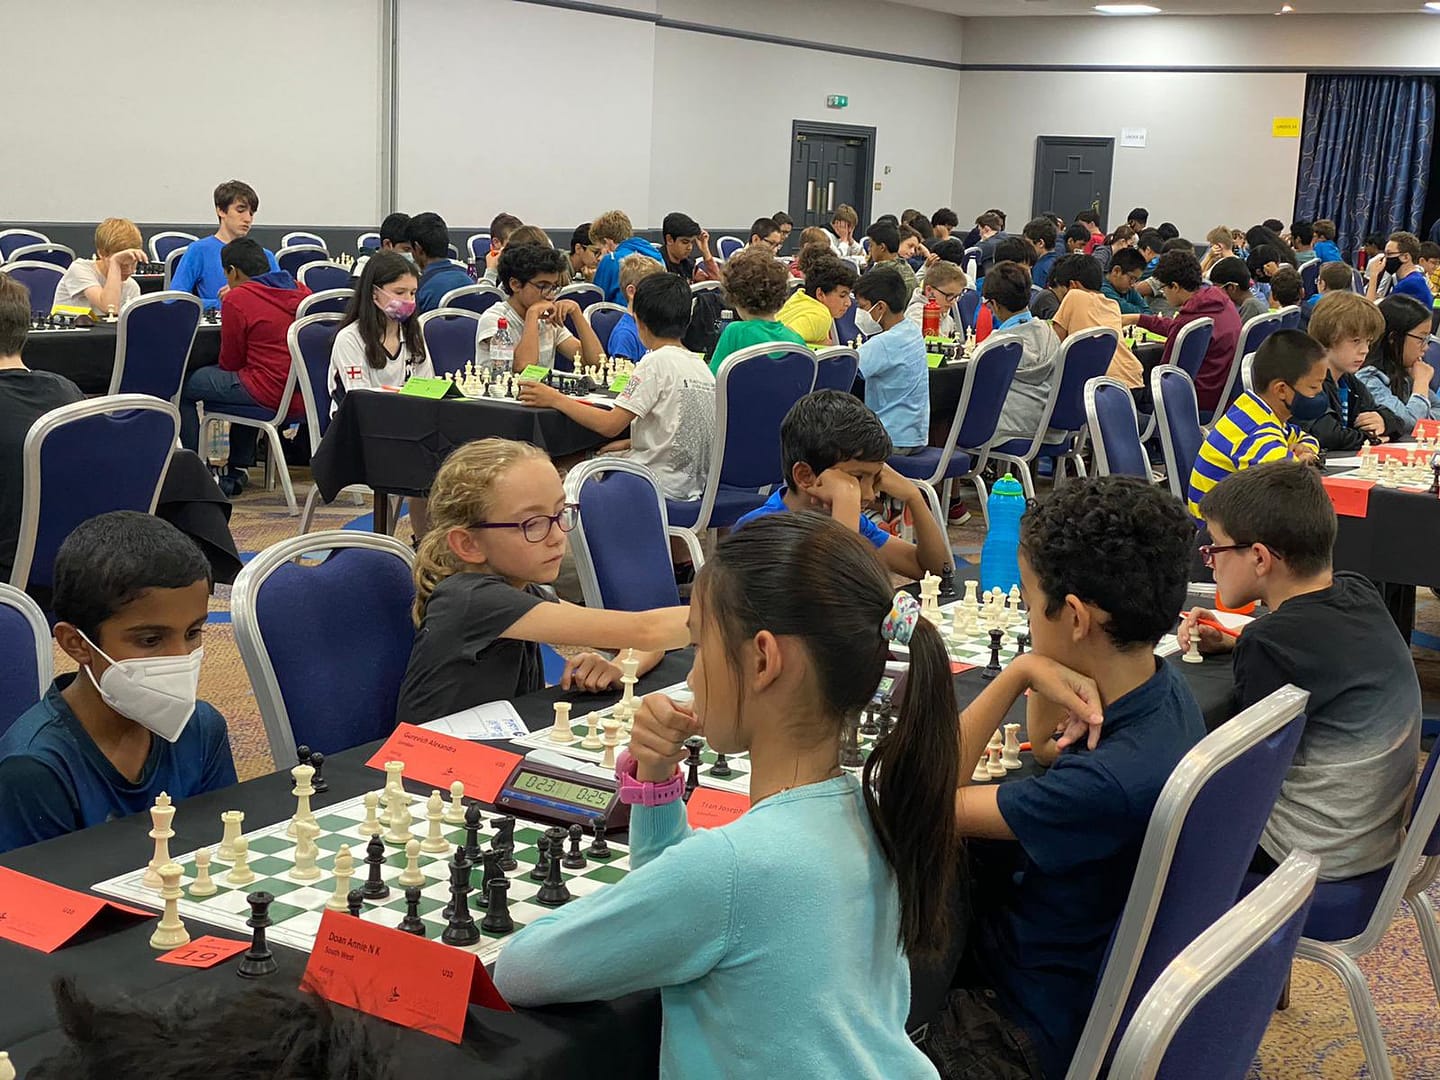 The UK Chess Challenge at Blenheim Palace